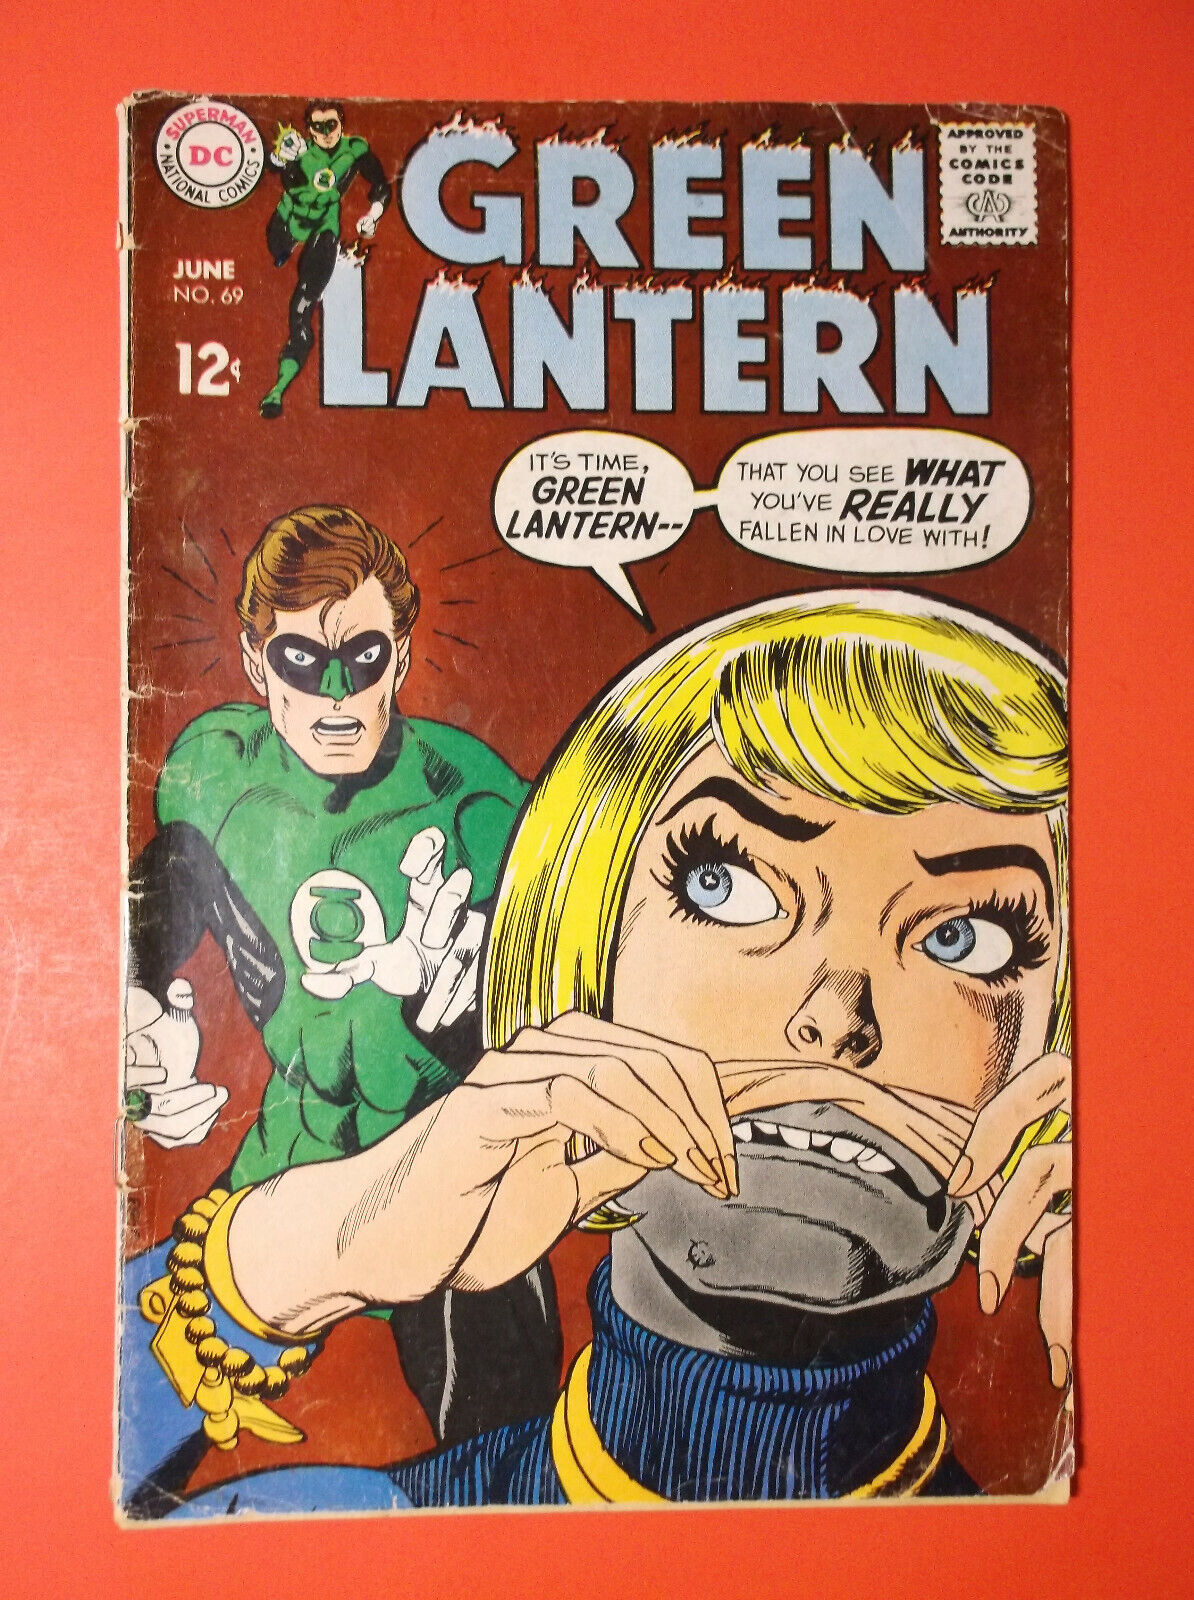 GREEN LANTERN # 69 - G/VG 3.0 - 1969 GIL KANE COVER 